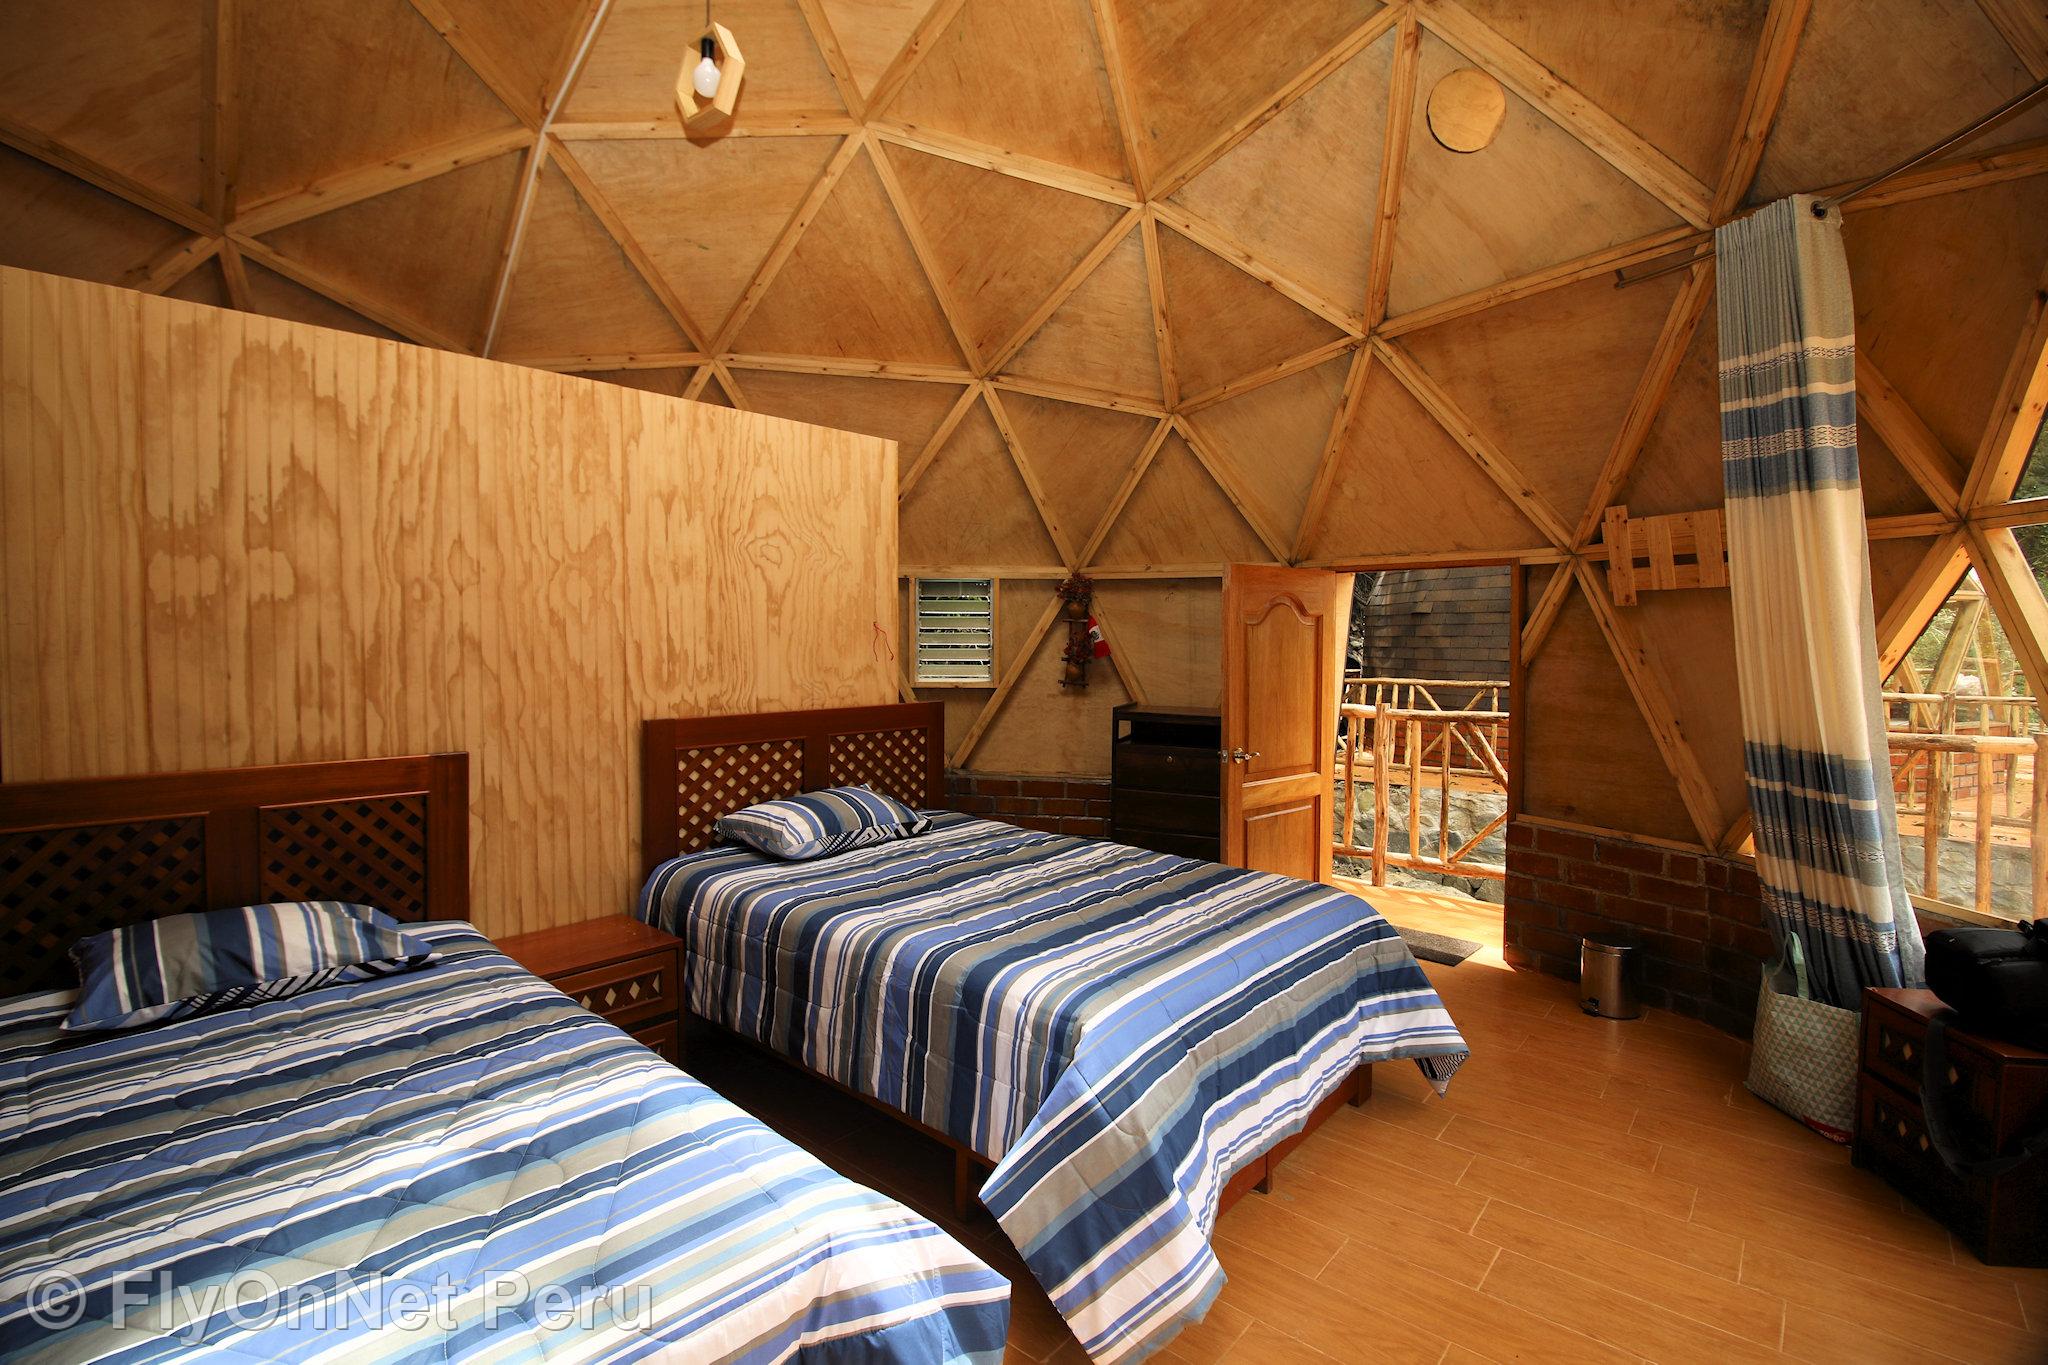 Photo Album: Interior of the domes